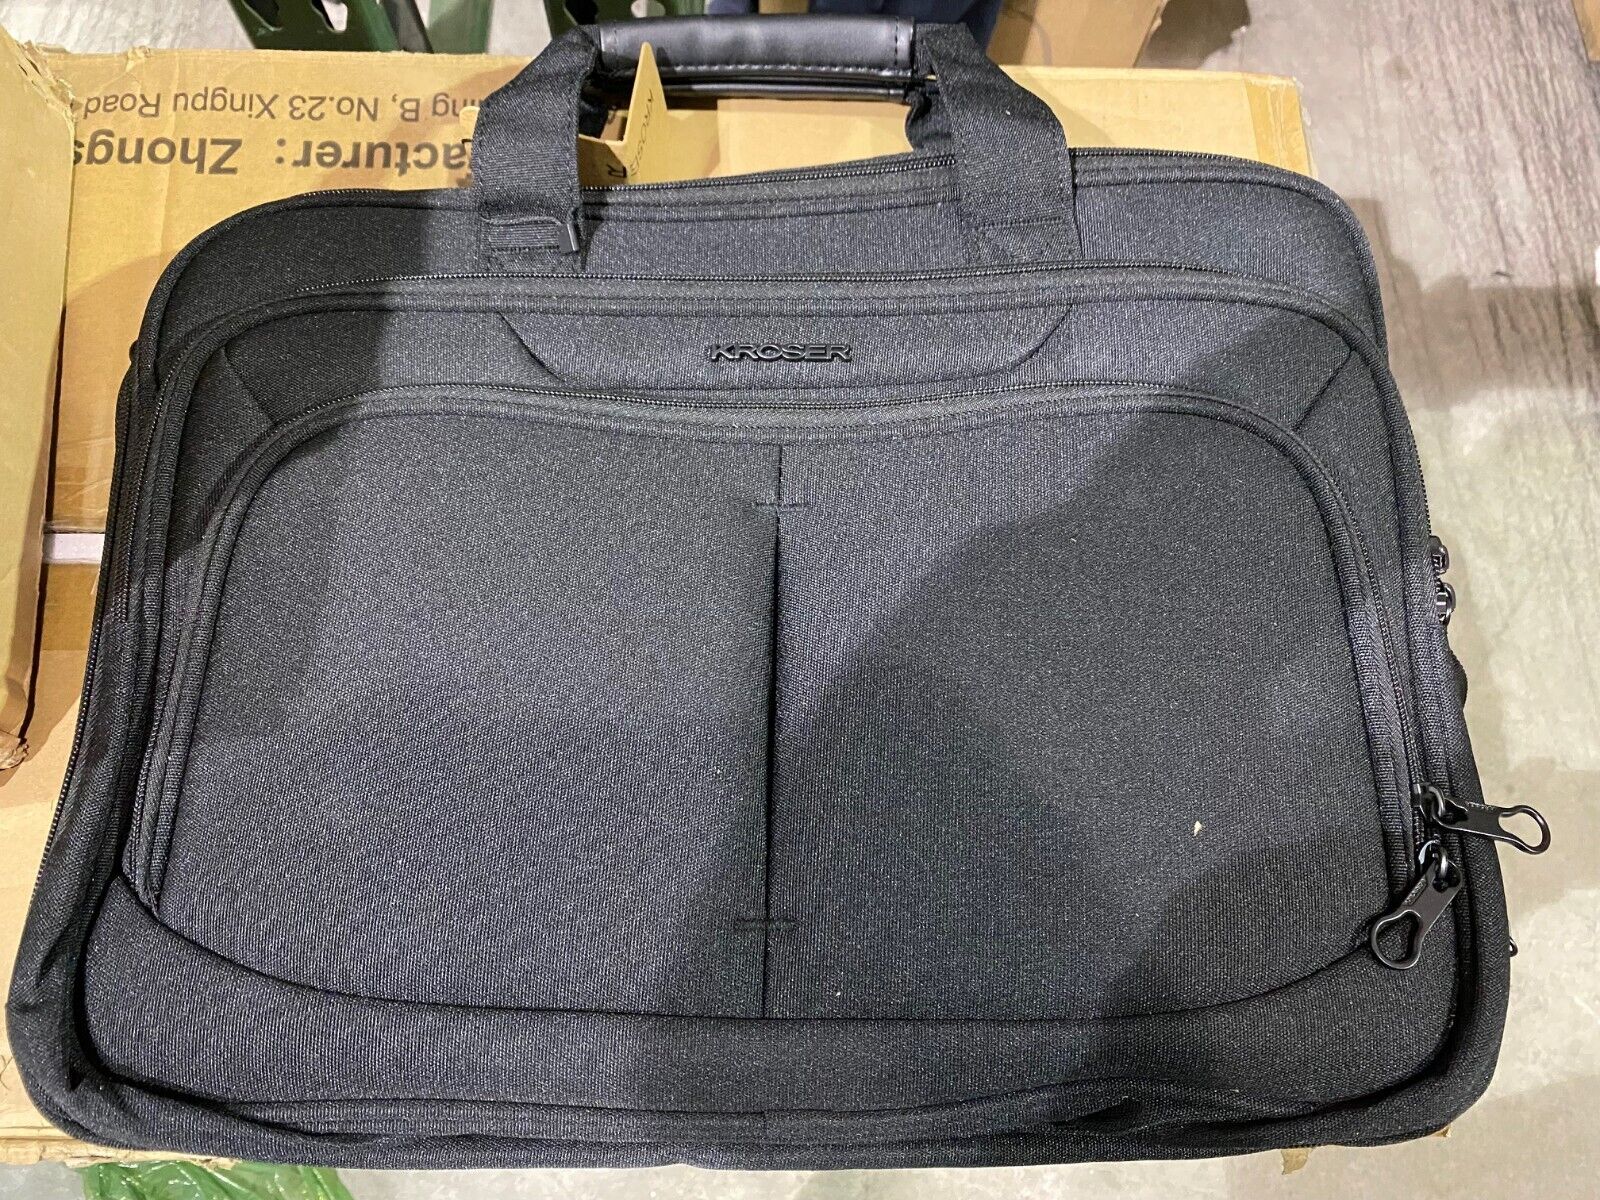 KROSER 18 Laptop Bag Premium Laptop Briefcase Fits Up to 17.3 Inch Laptop Bag